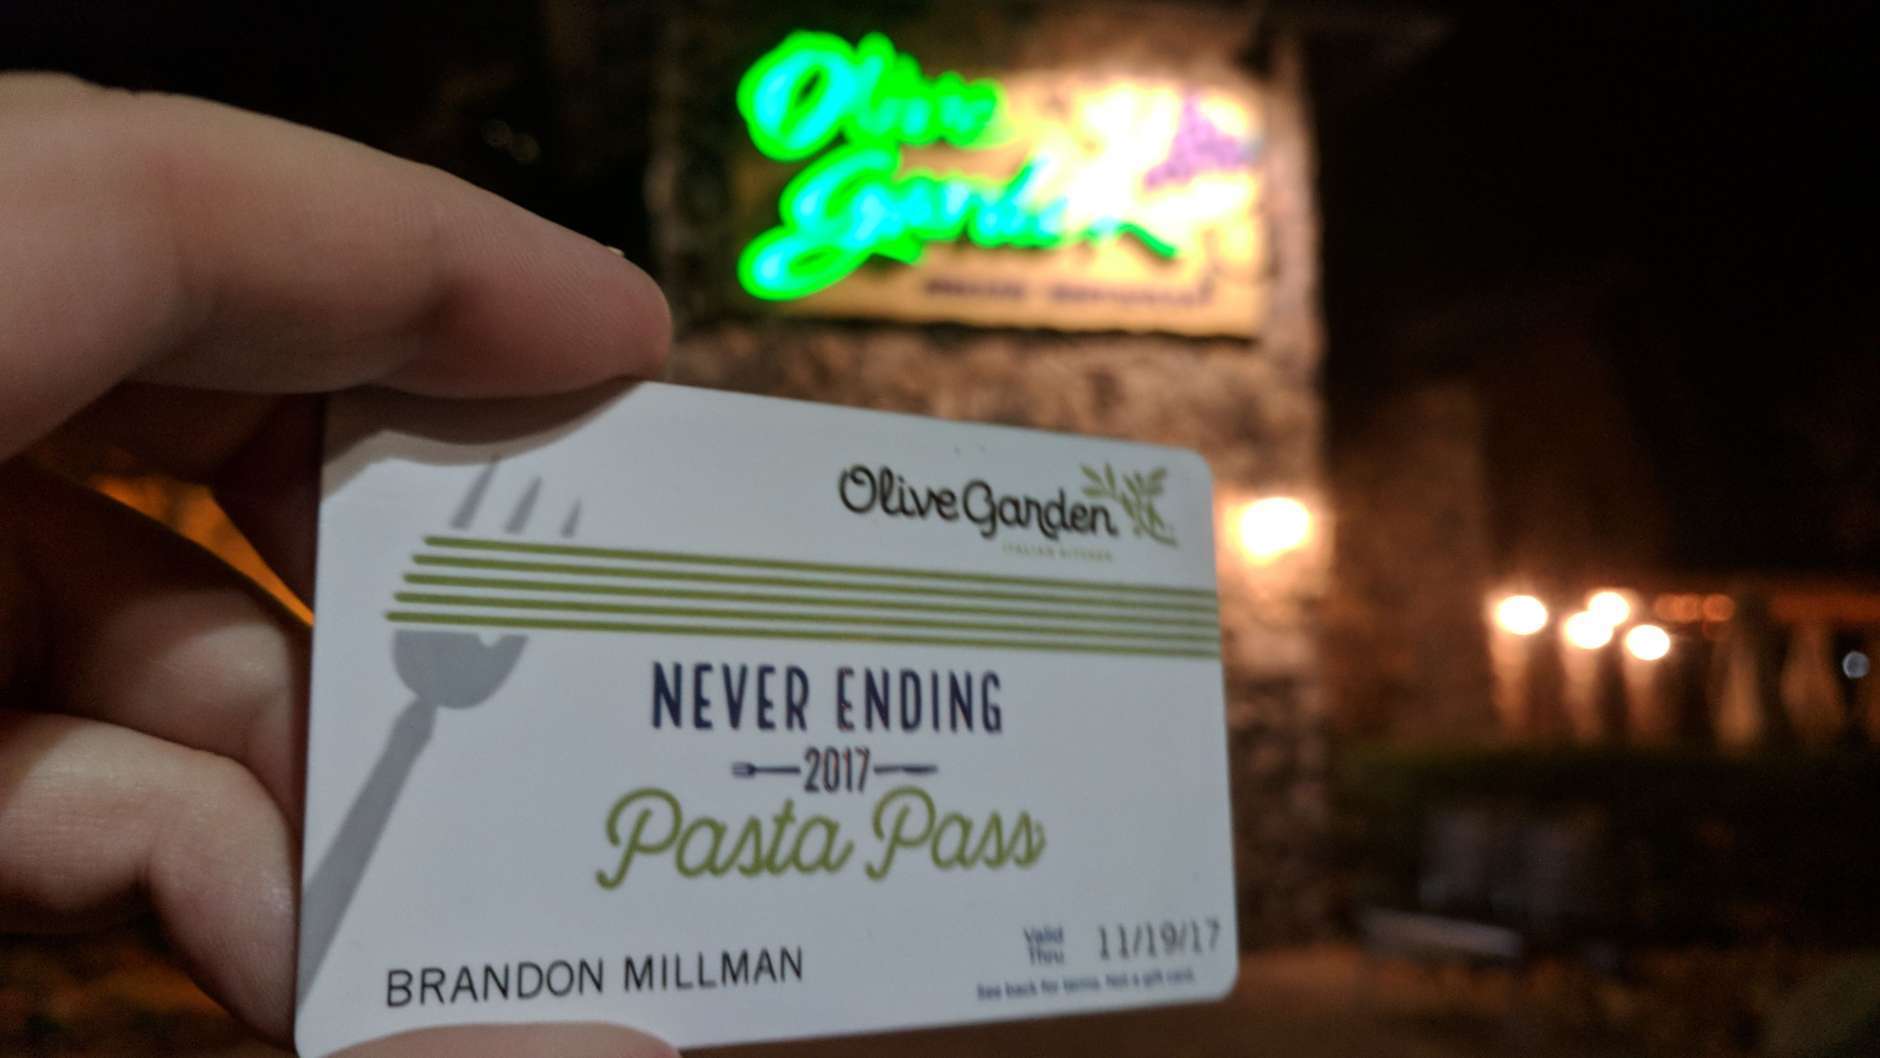 The Sterling Olive Garden. (WTOP/Brandon Millman)